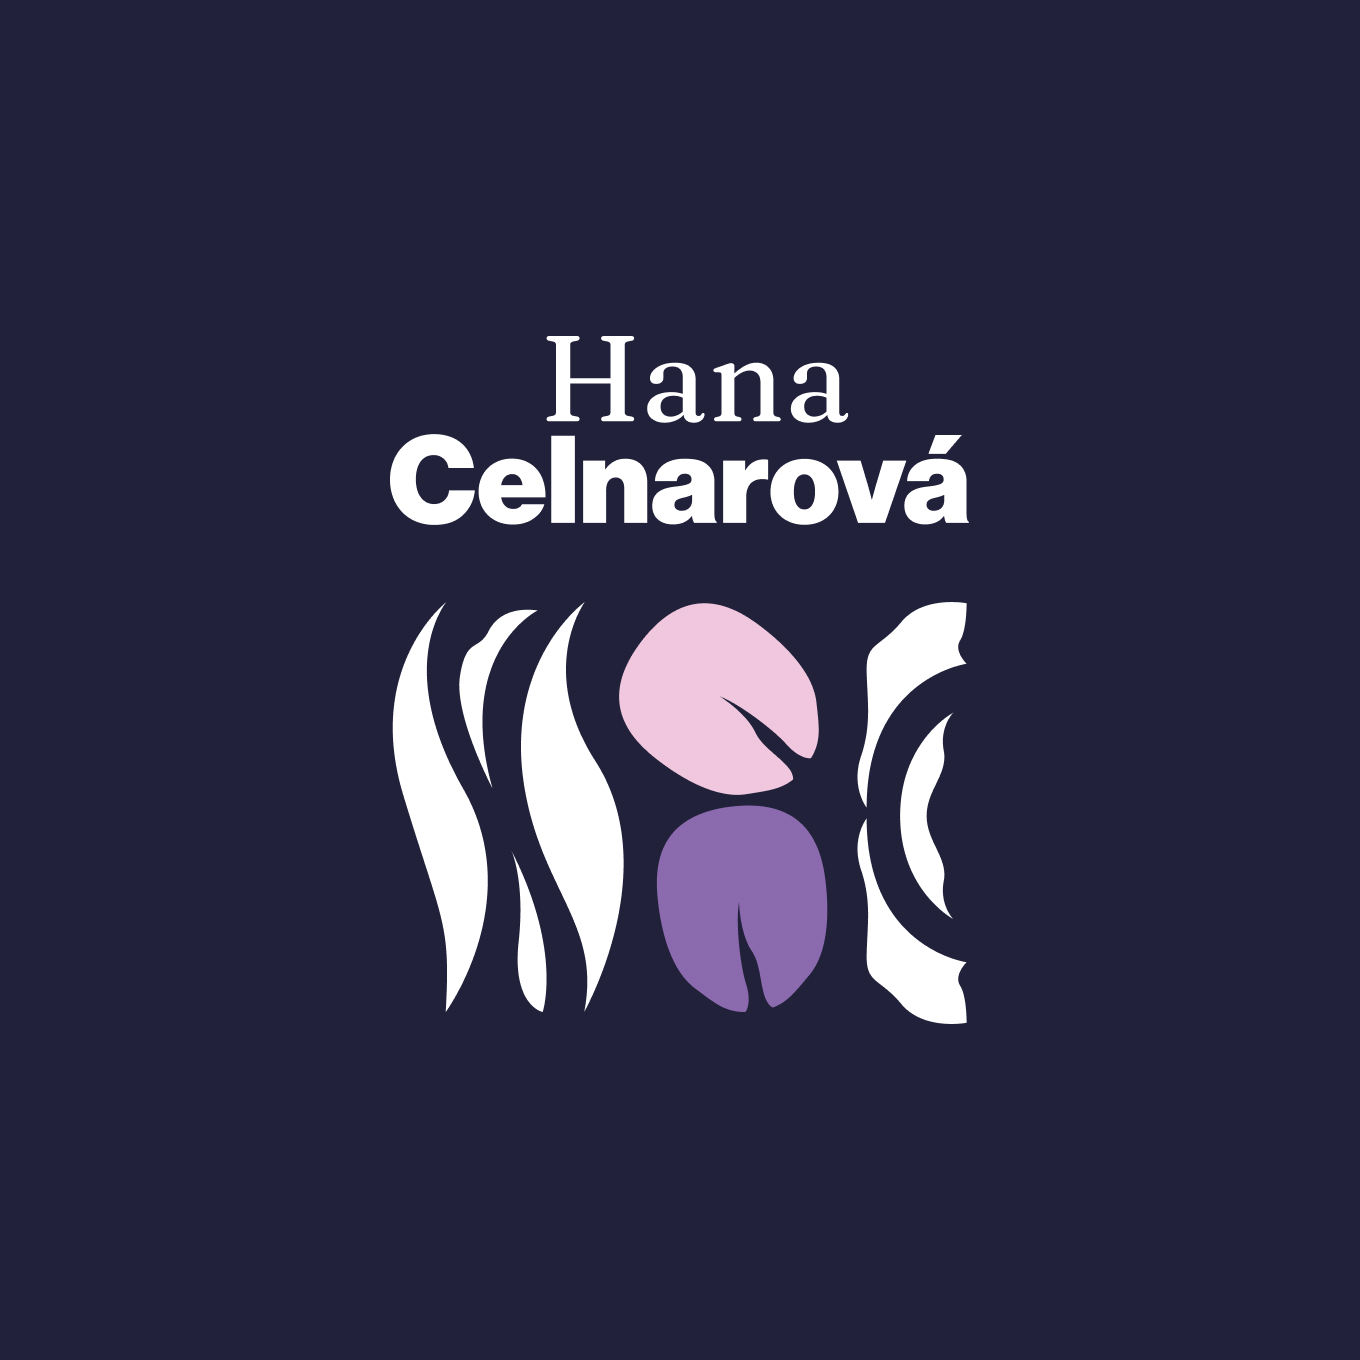 hana_celnarova_logo